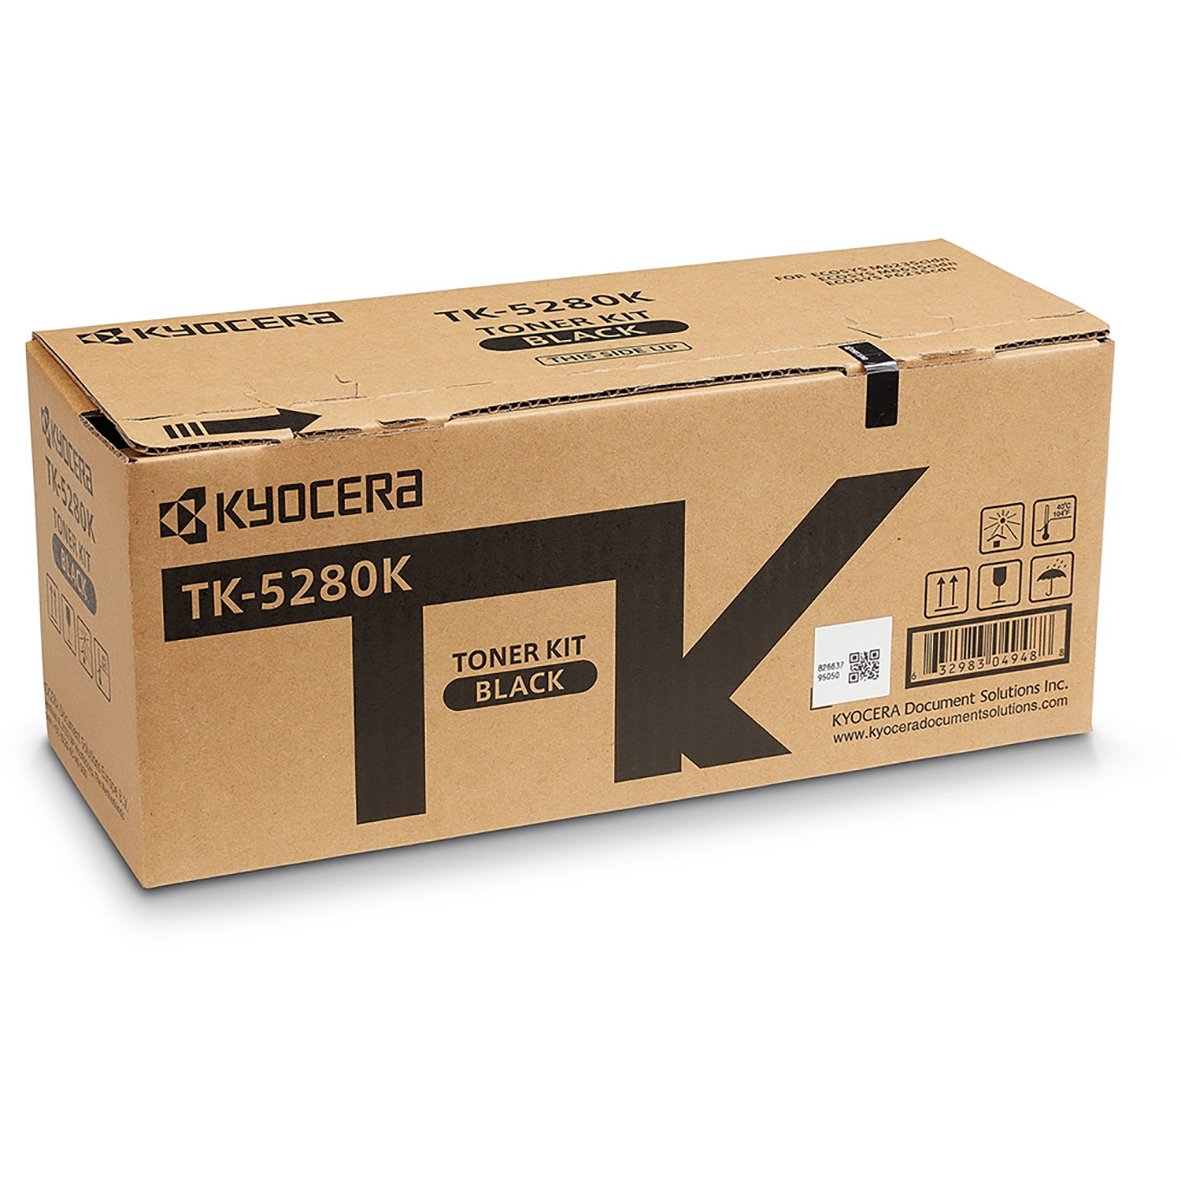 Toner Kit Kyocera 13000sid TK-5280K Svart 32110349